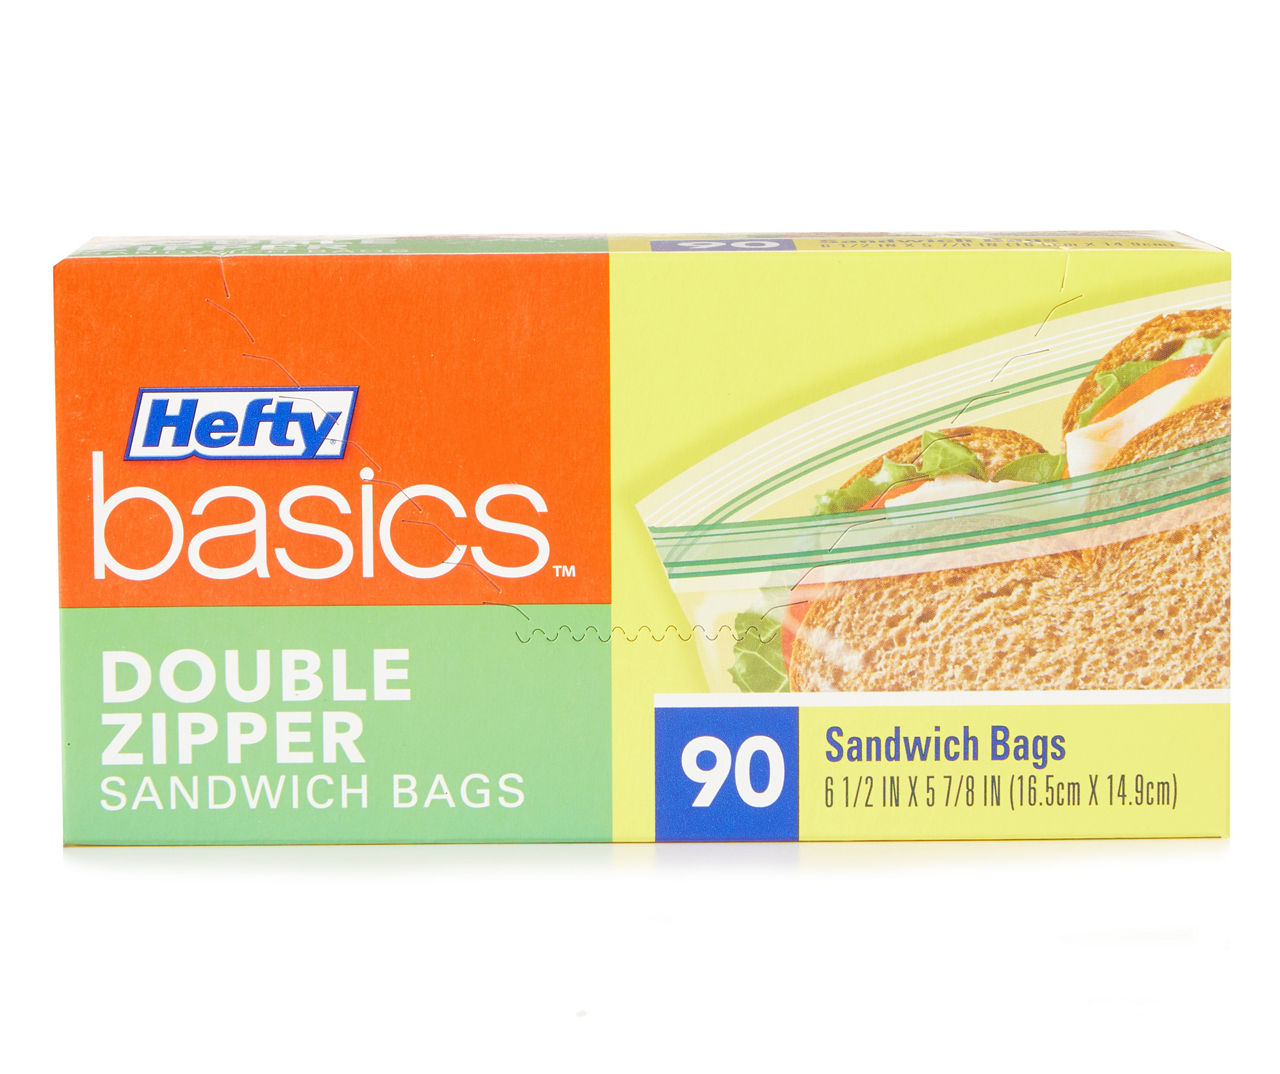 Double Zipper Sandwich Bags, 90-Count